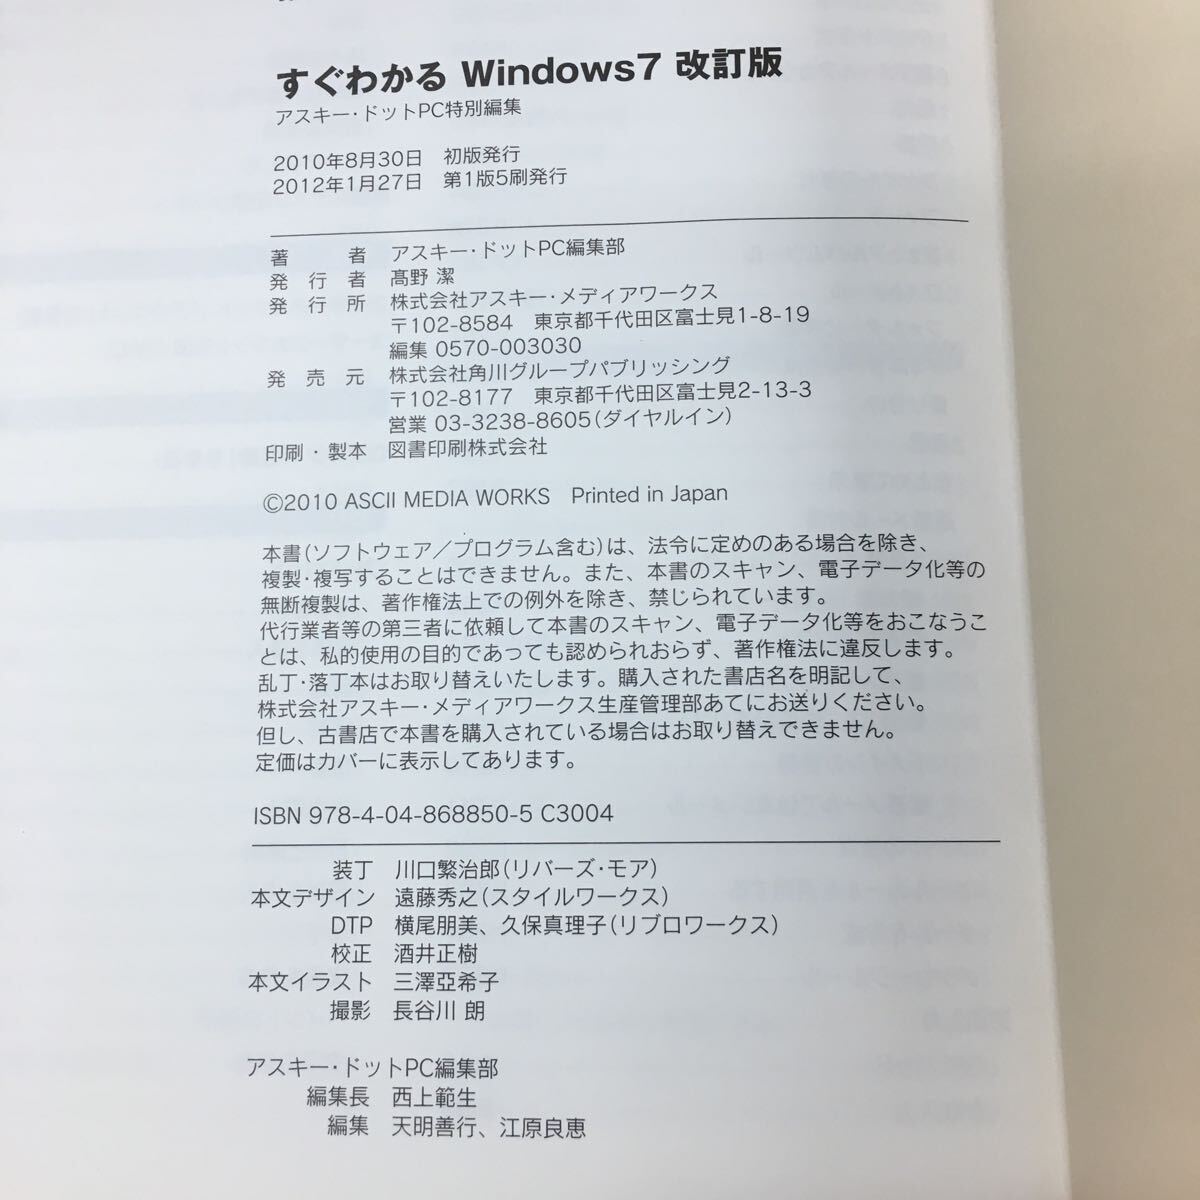 h-323※3 すぐわかるWindows7 改訂版 2012年1月27日 第1版5刷発行 アスキー・メディアワークス パソコン Windows7 参考書_画像5